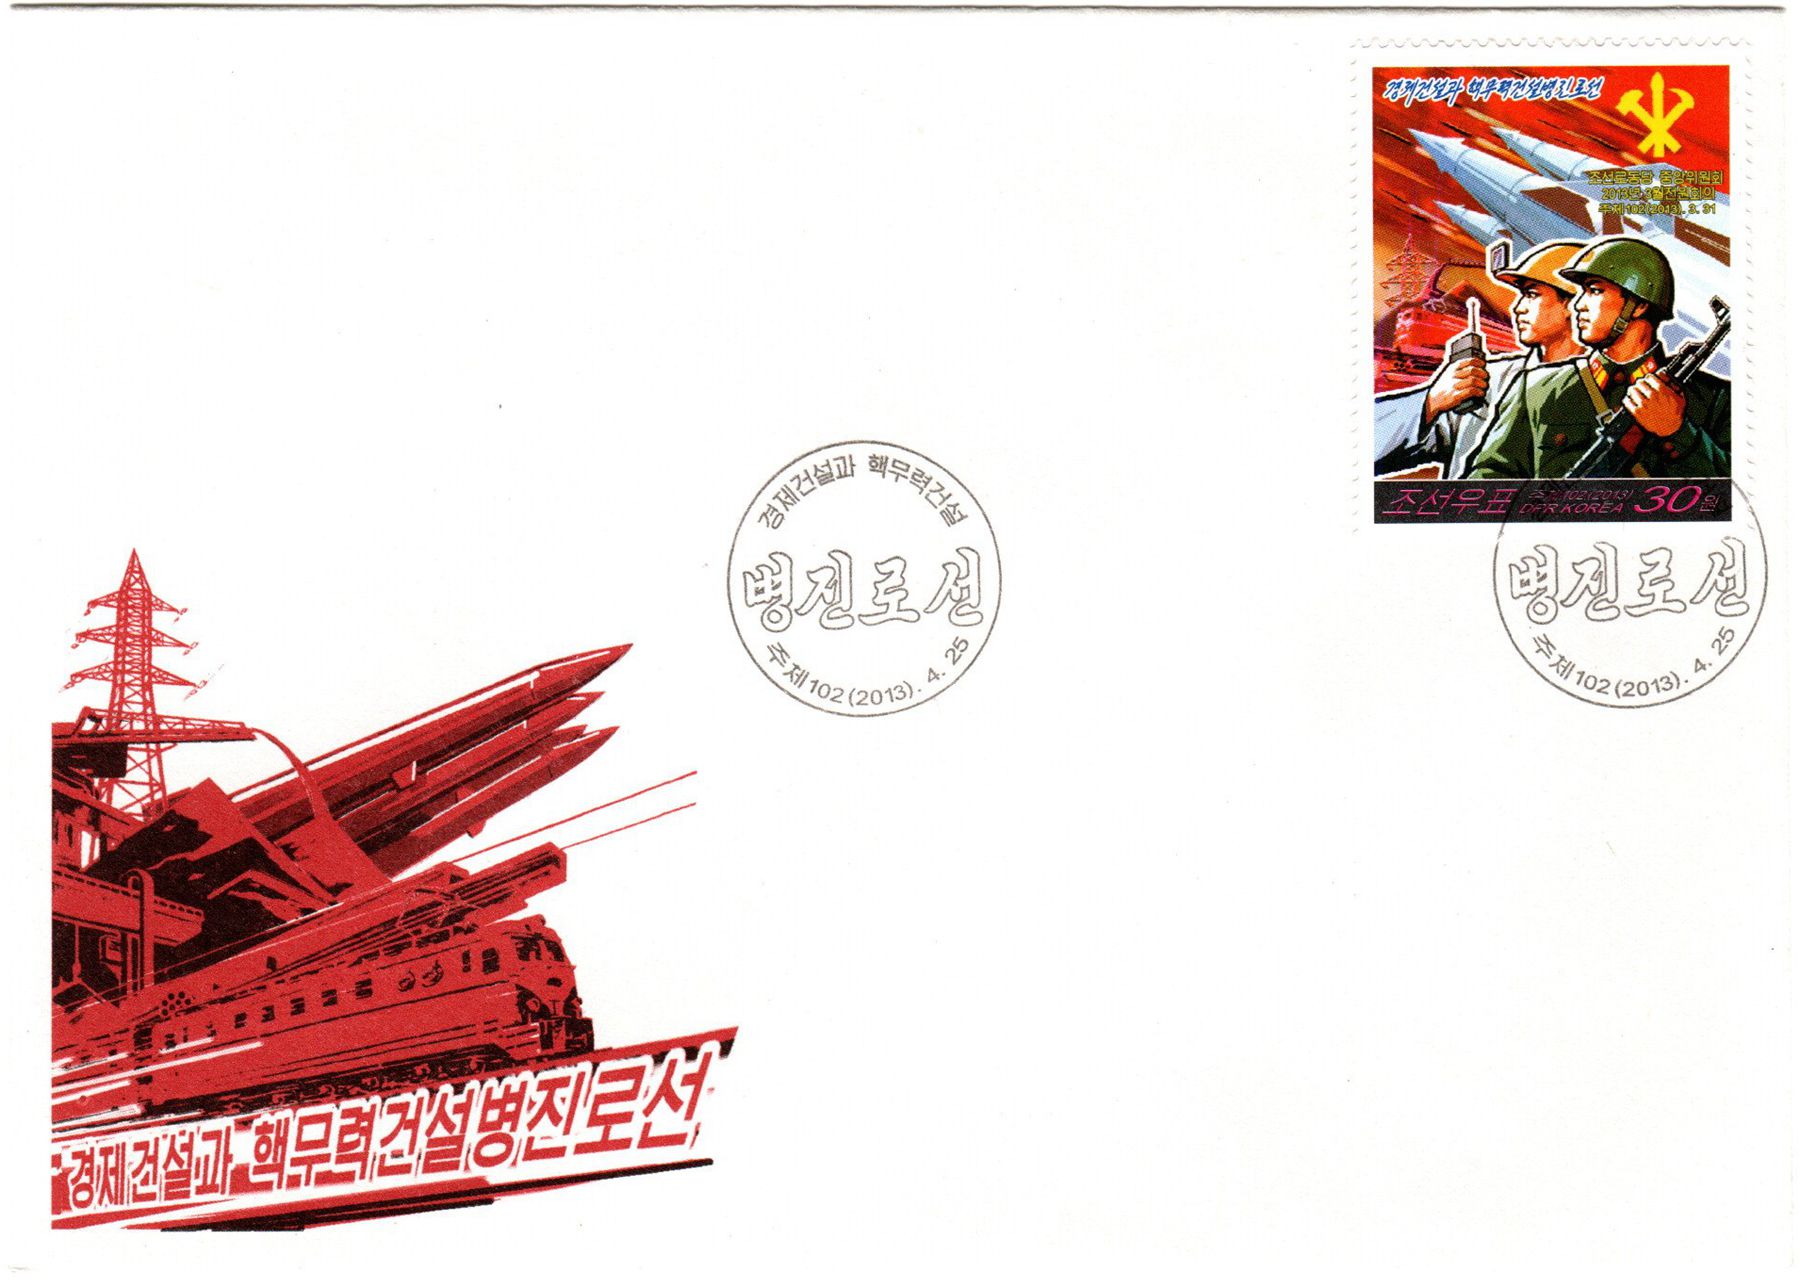 L9817, Korea "Upbuilding Nuclear Forces" Stamp, 2013 FDC